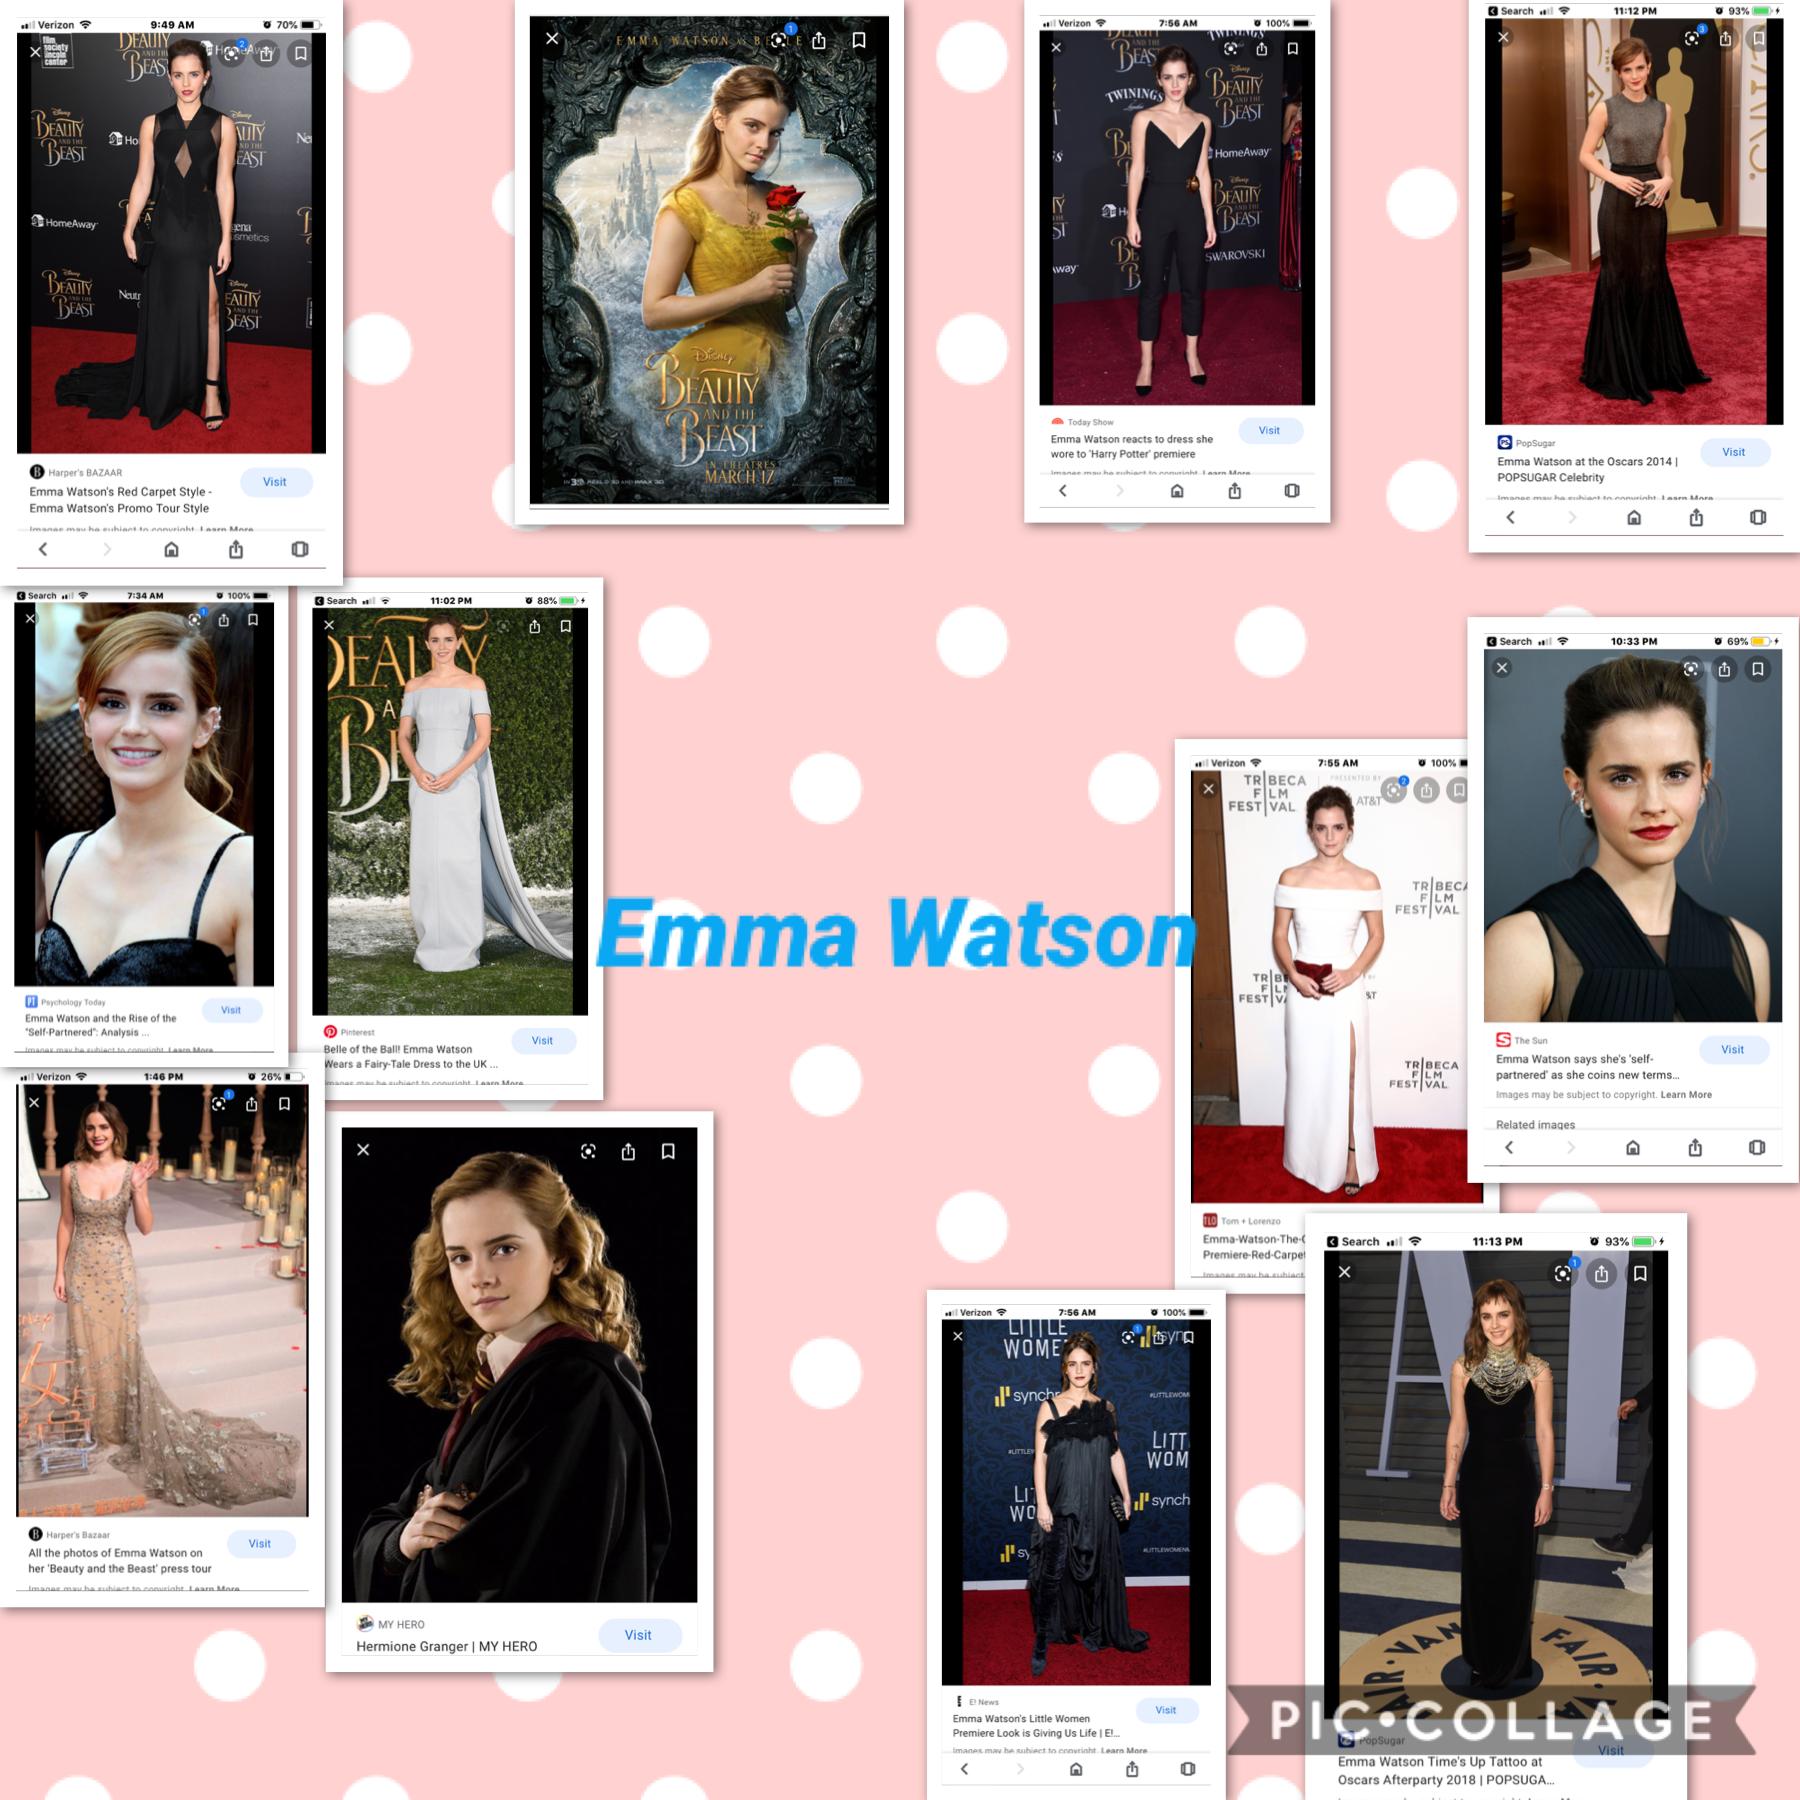 One of my role models Emma Watson 